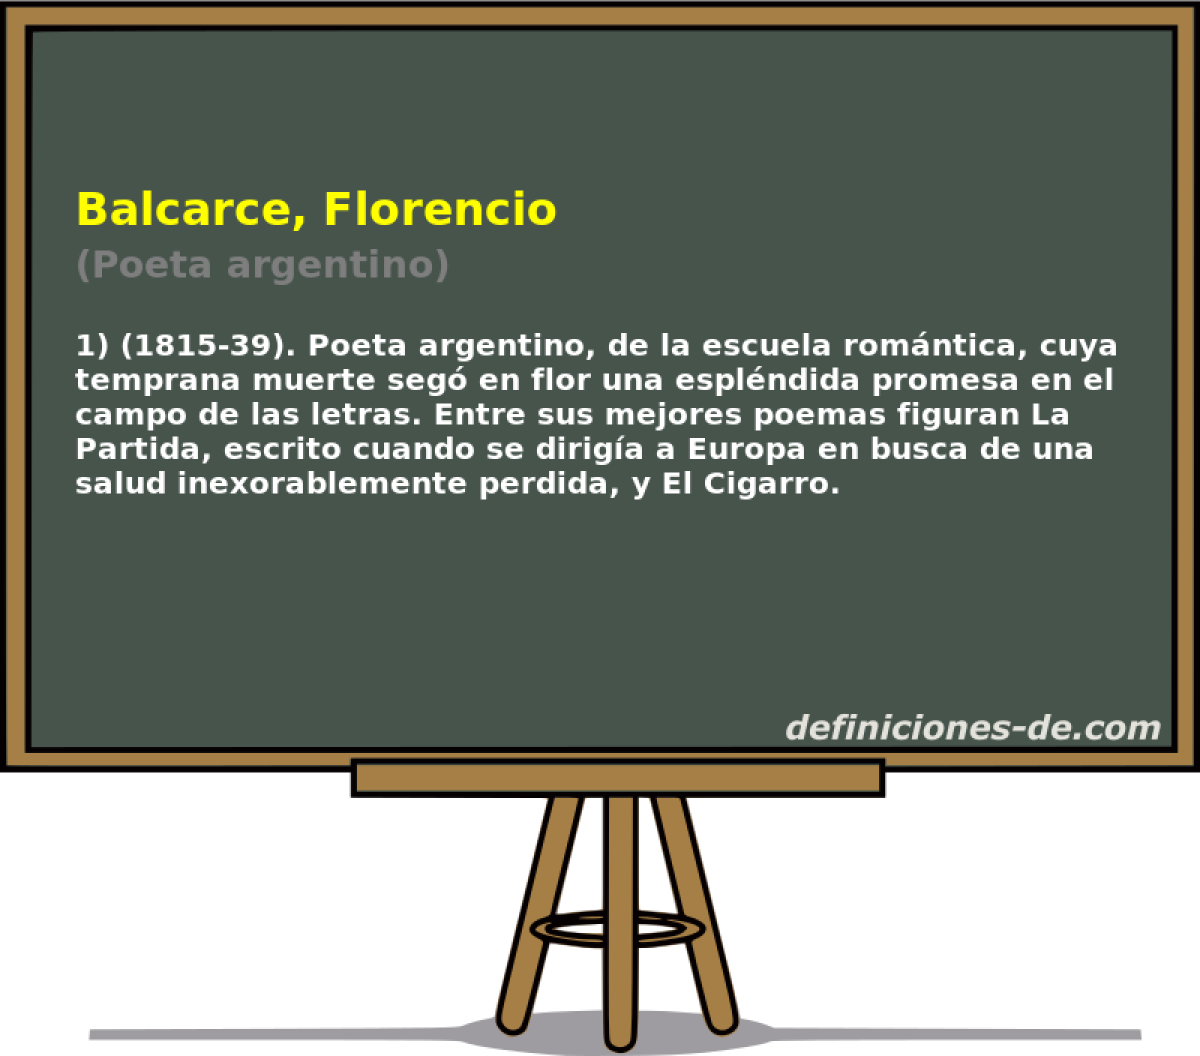 Balcarce, Florencio (Poeta argentino)